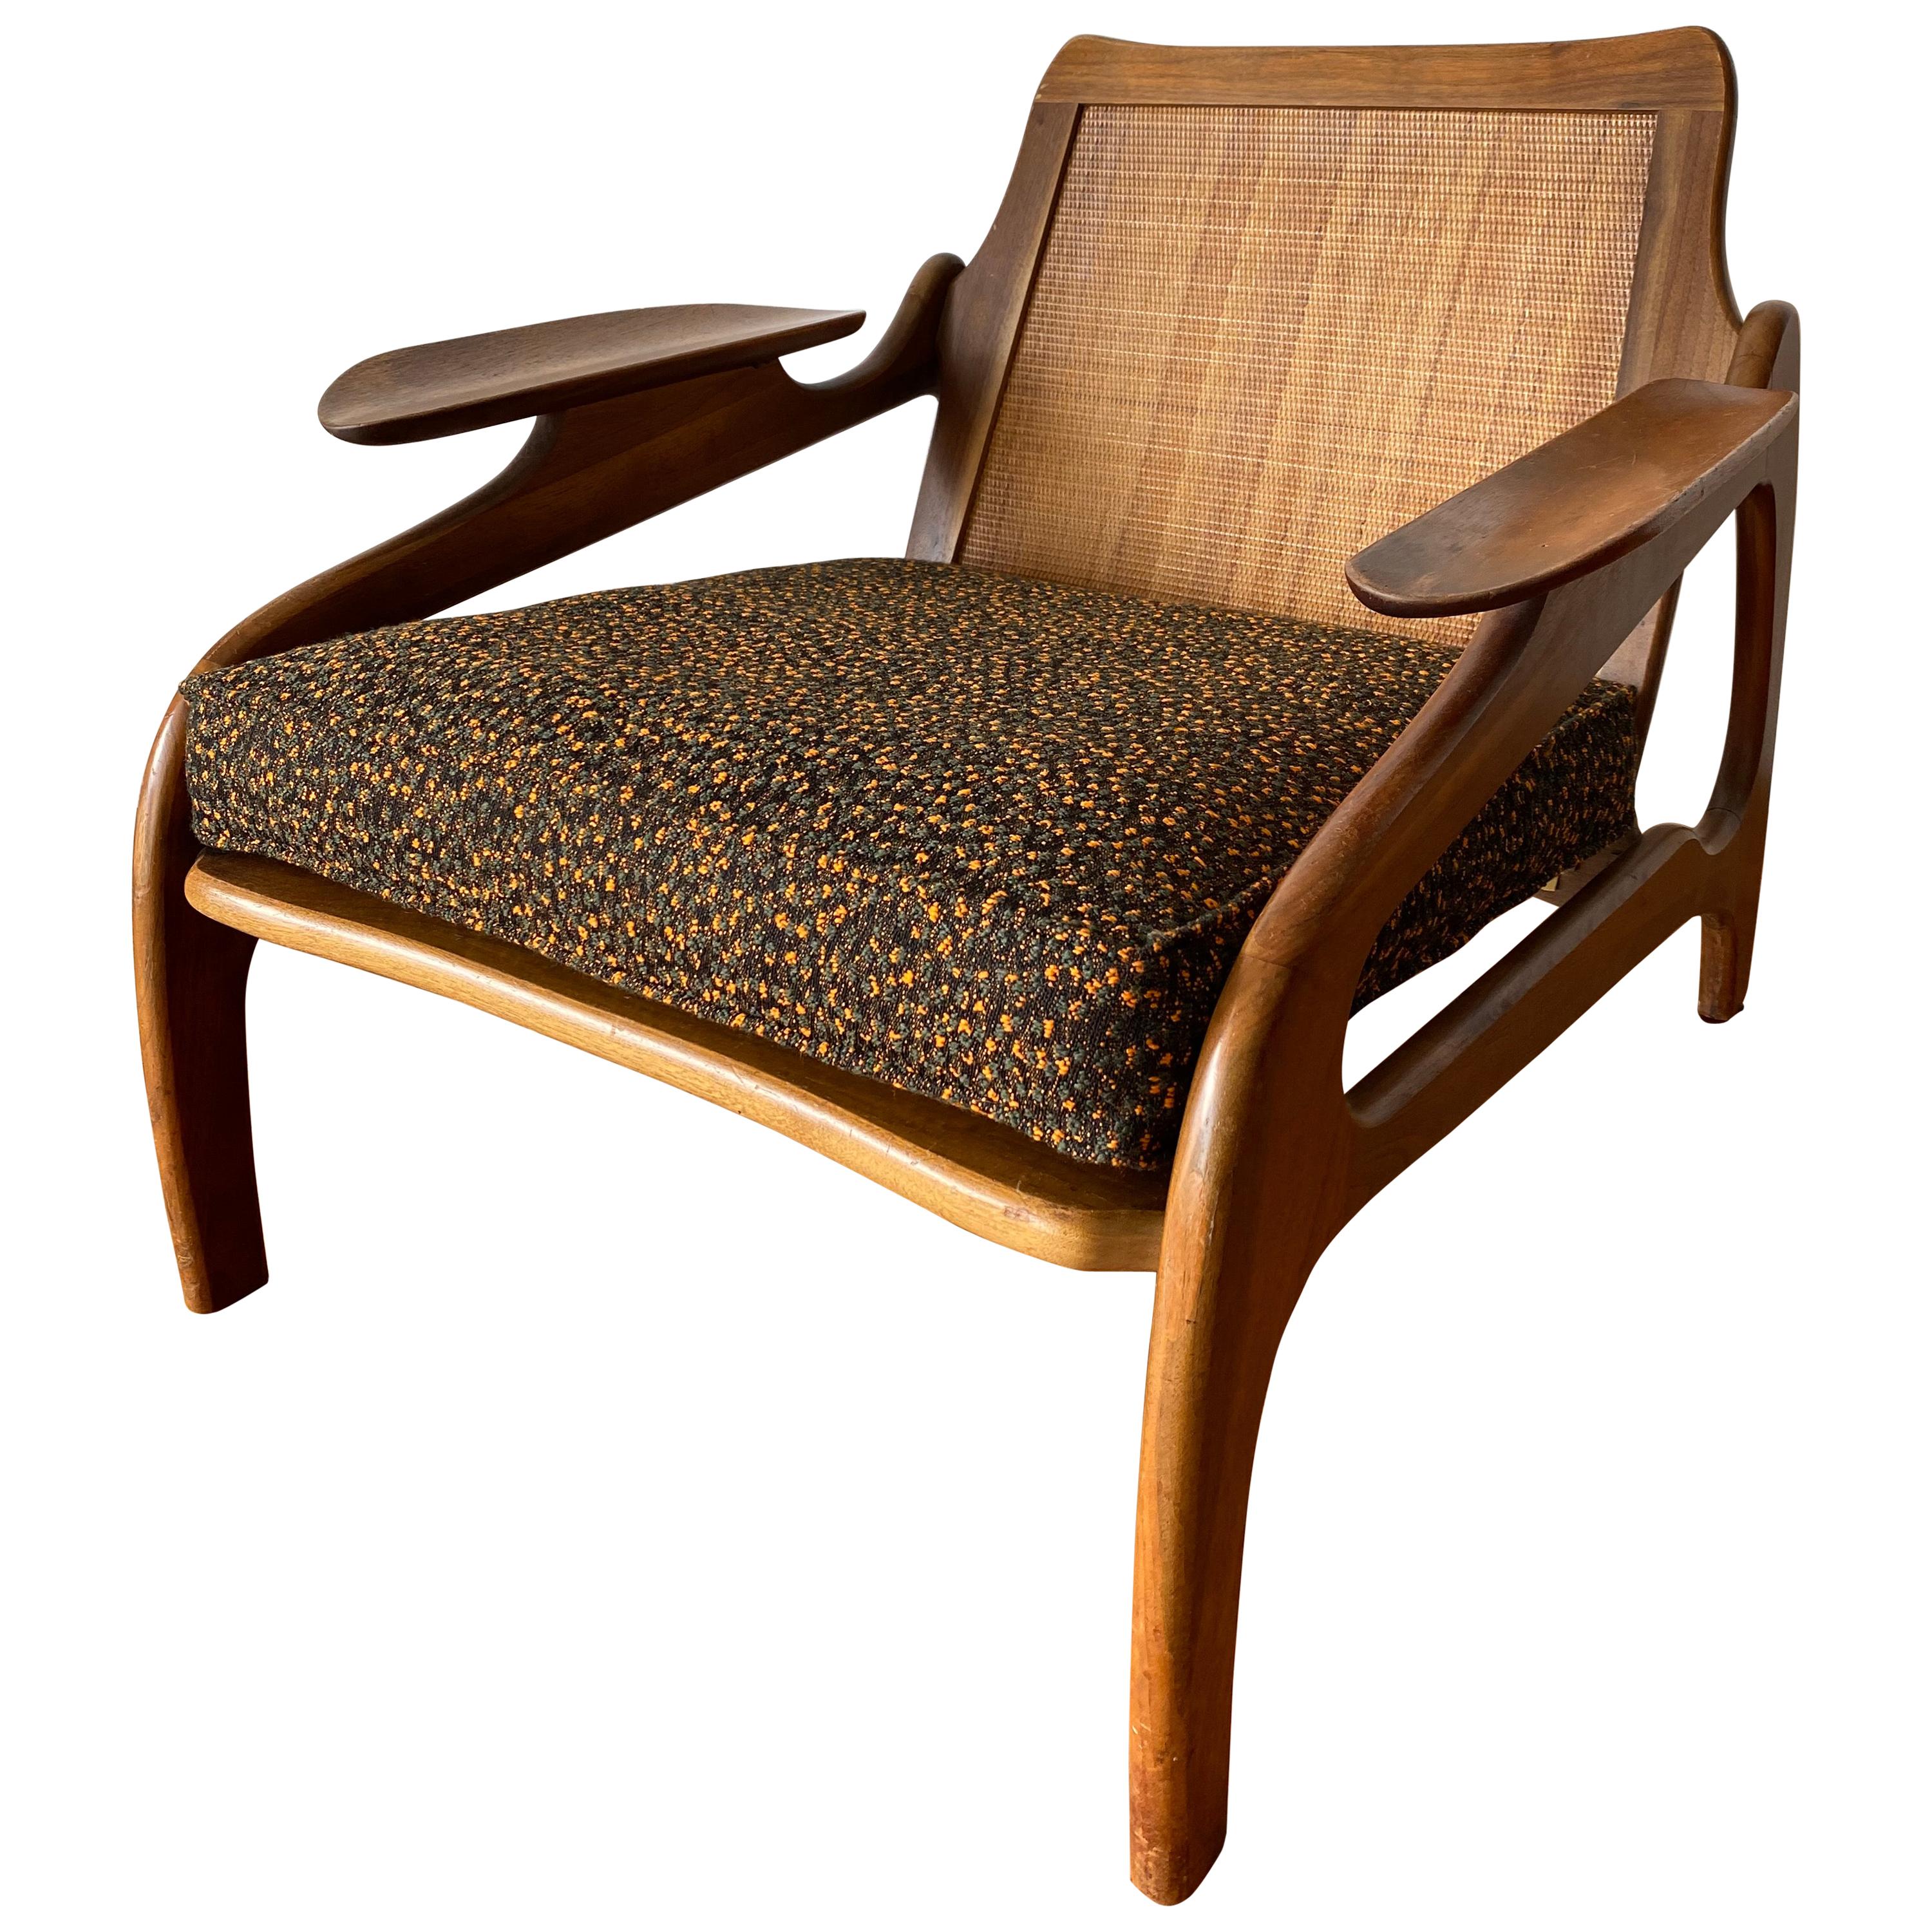 Adrian Pearsall 1209-C Craft Associates Chair